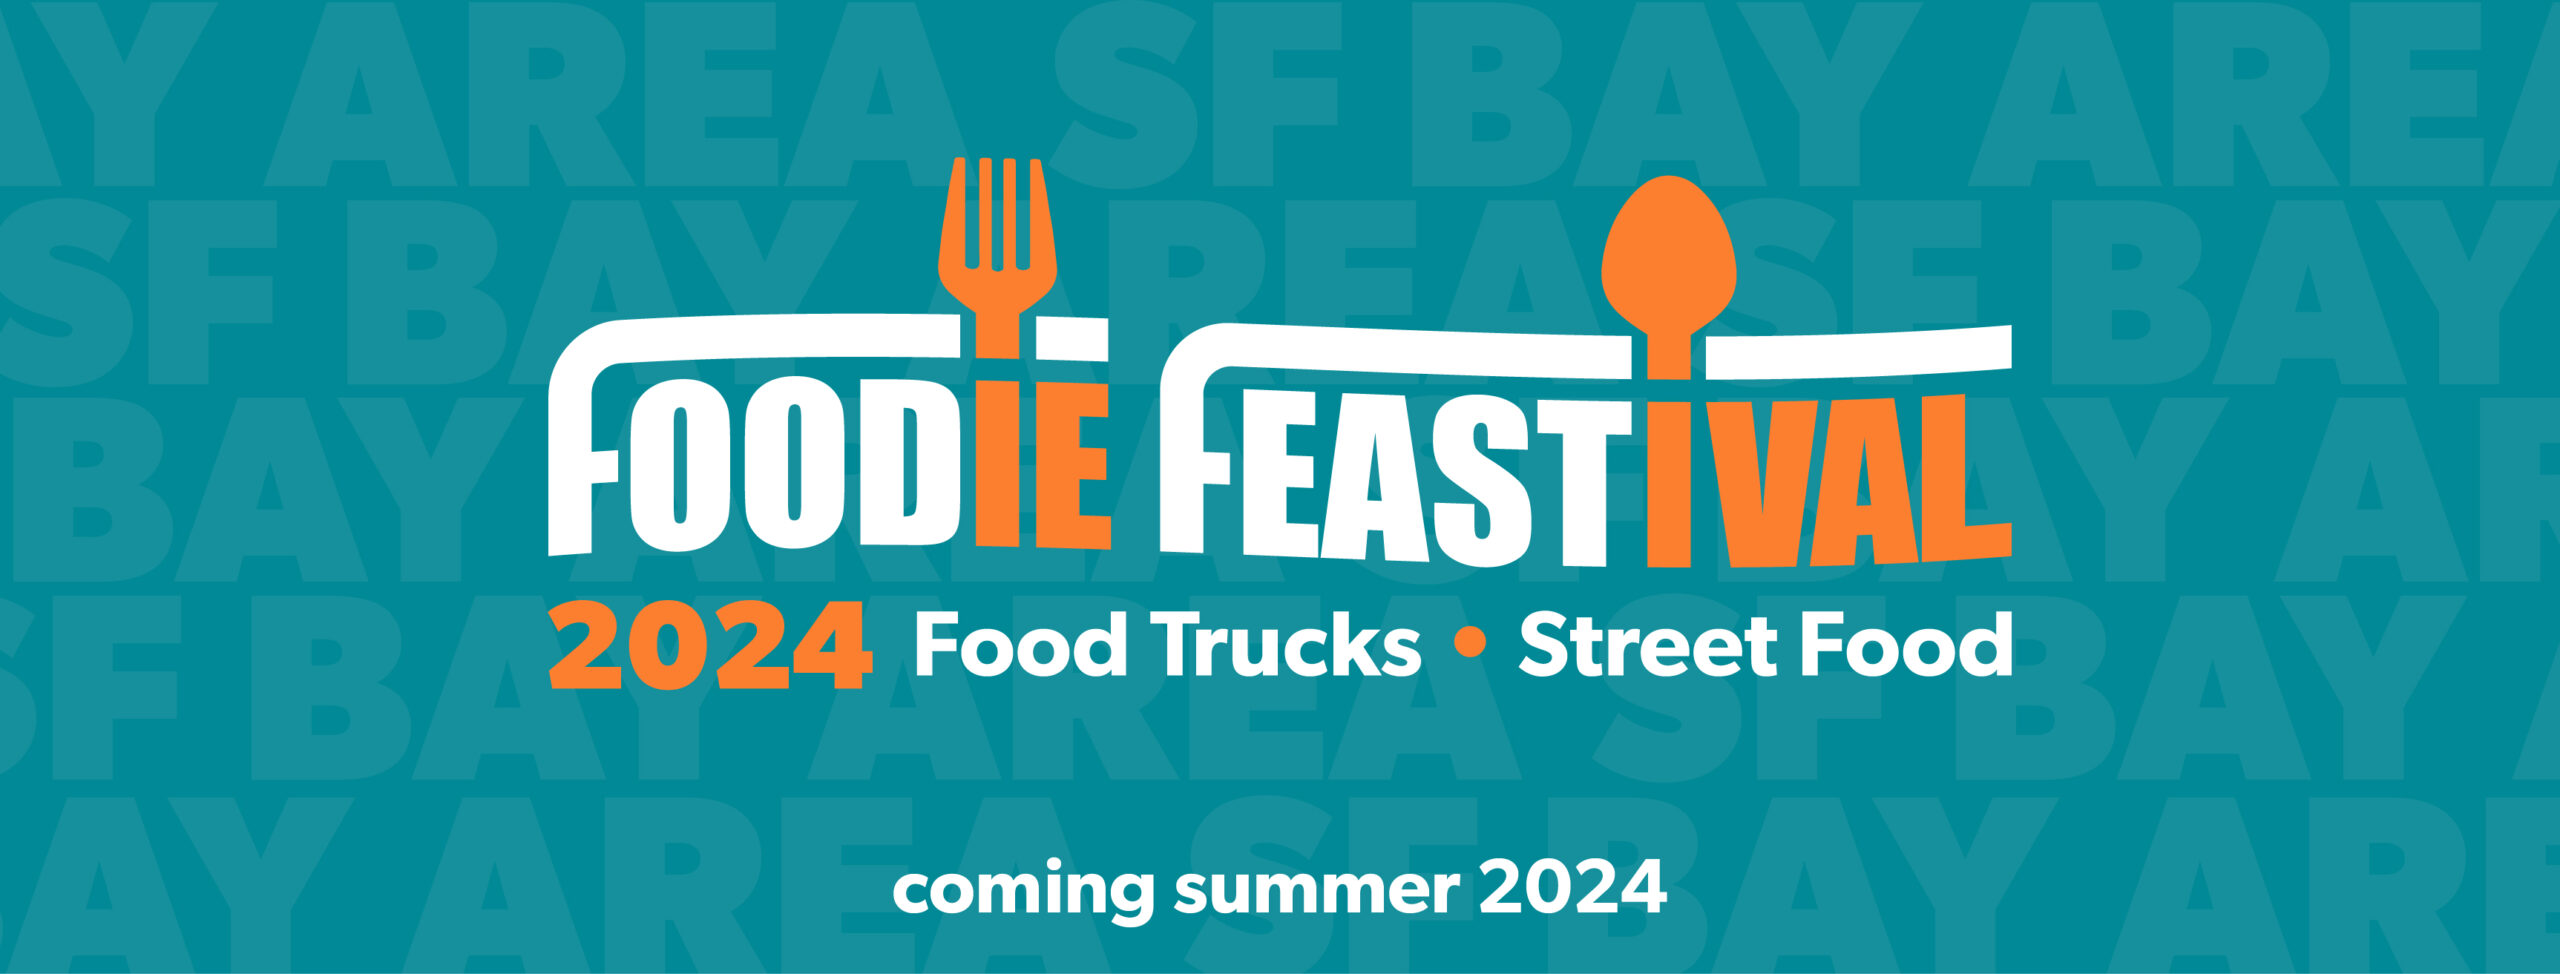 Food Festival Food 2024 Truck